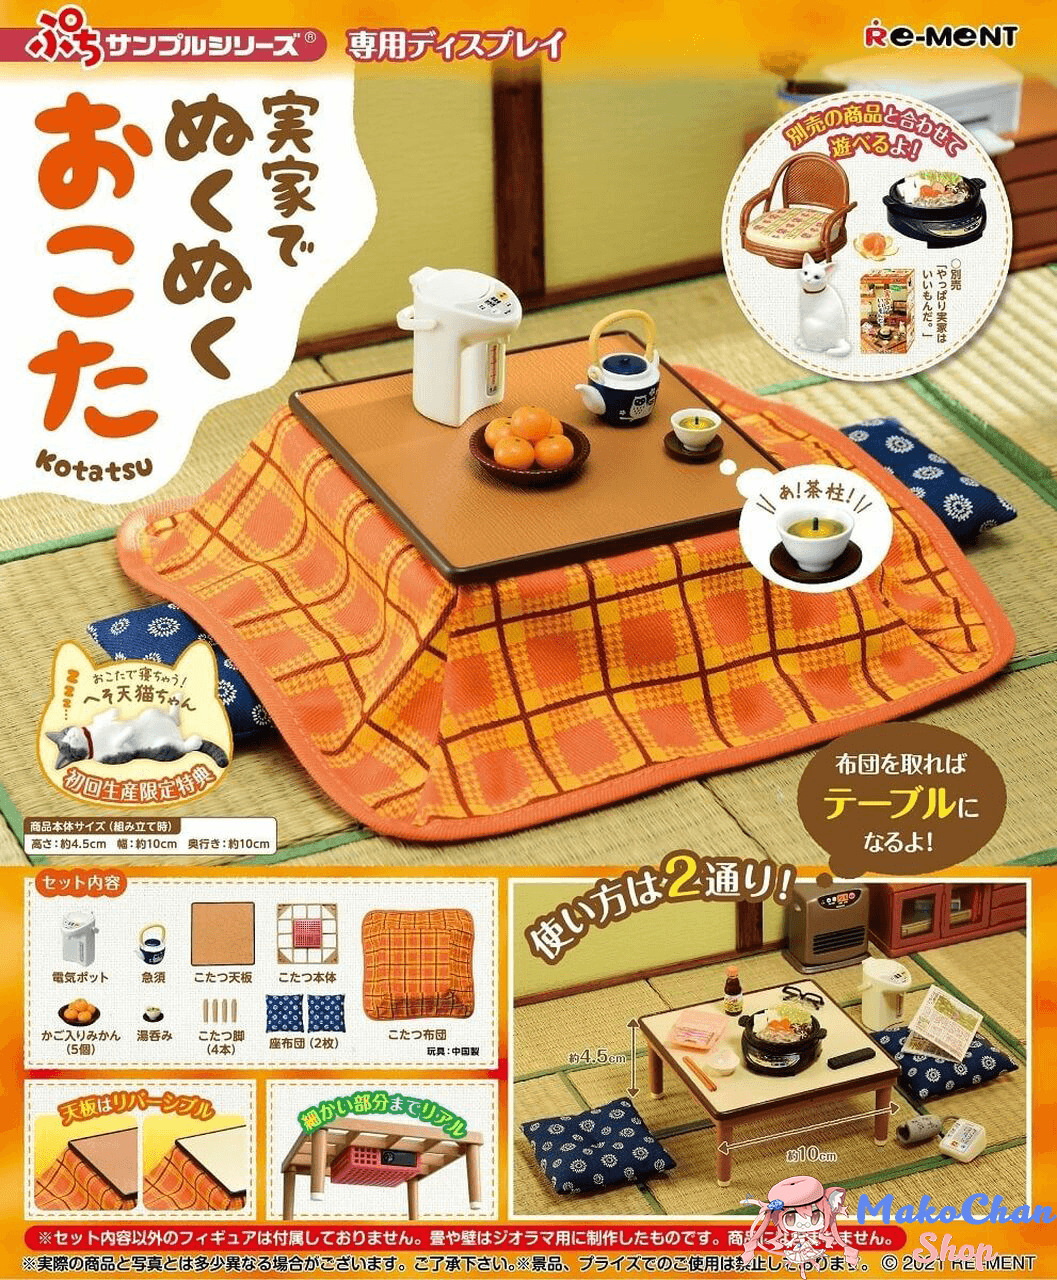 Re-ment Petit Sample Parents' Home Kotatsu Makochan.store